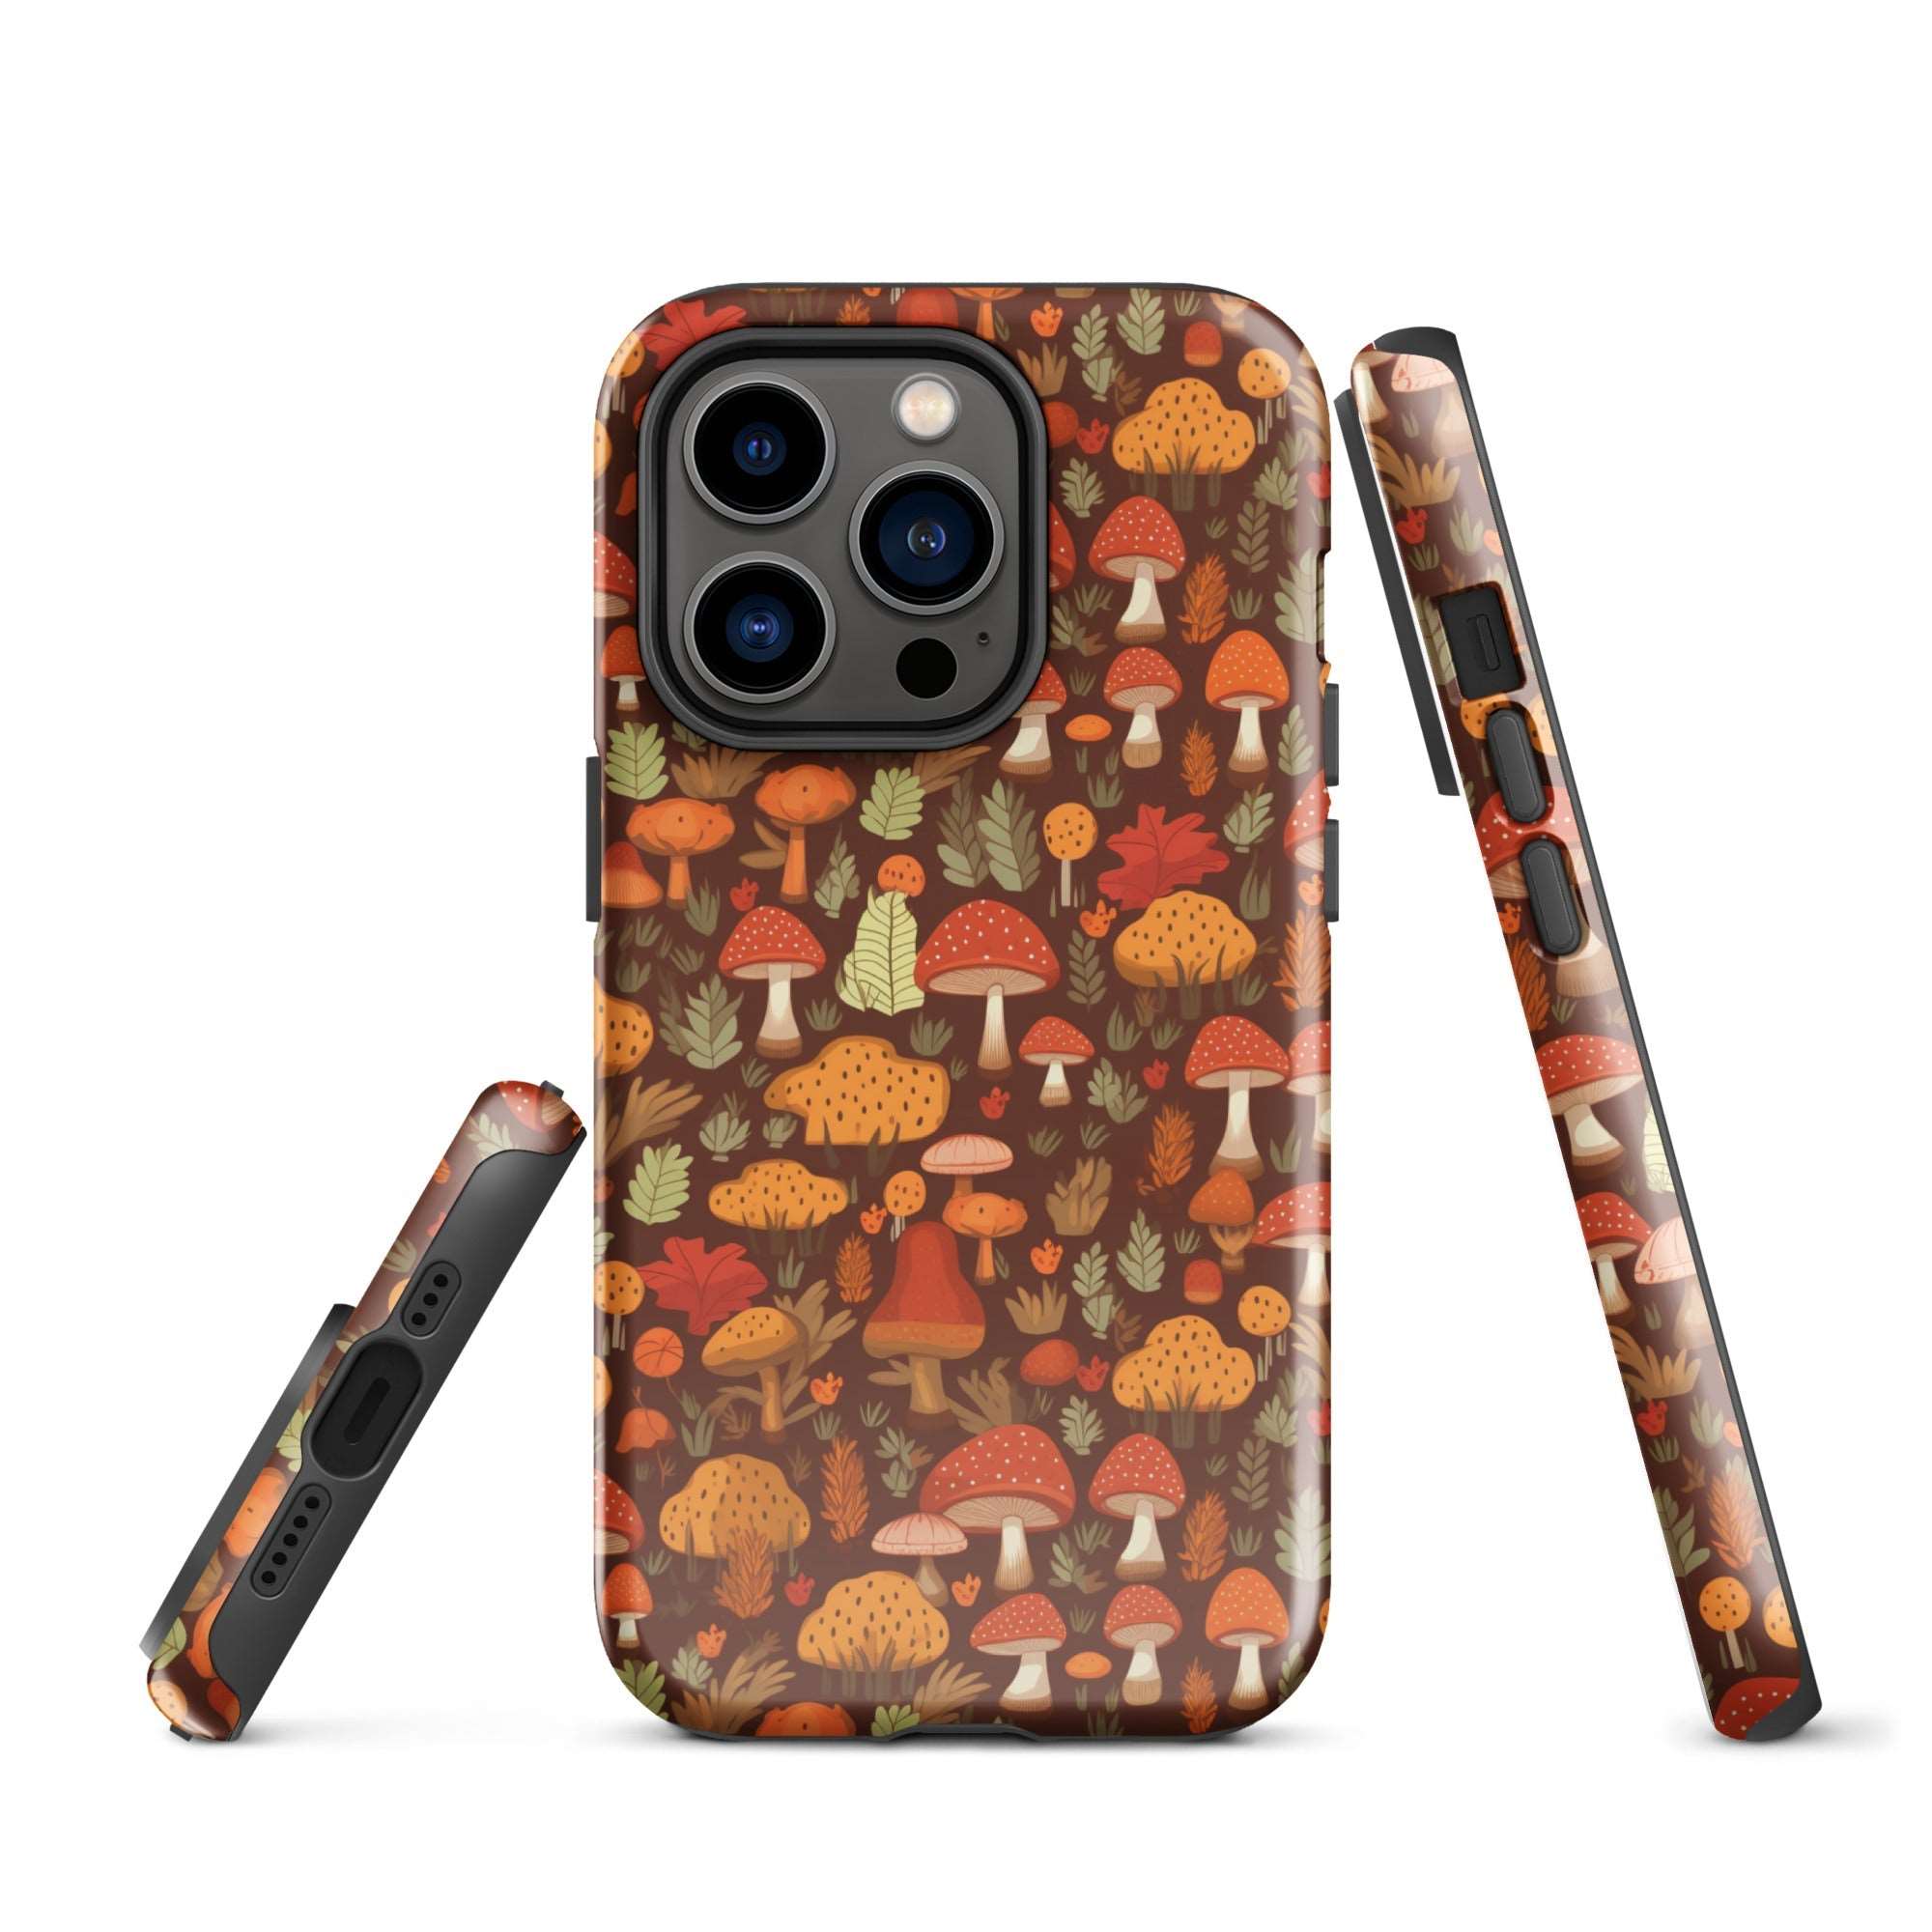 Autumn Spore Wonderland - Enchanting Mushroom and Leaf Designs - iPhone Case - Pattern Symphony